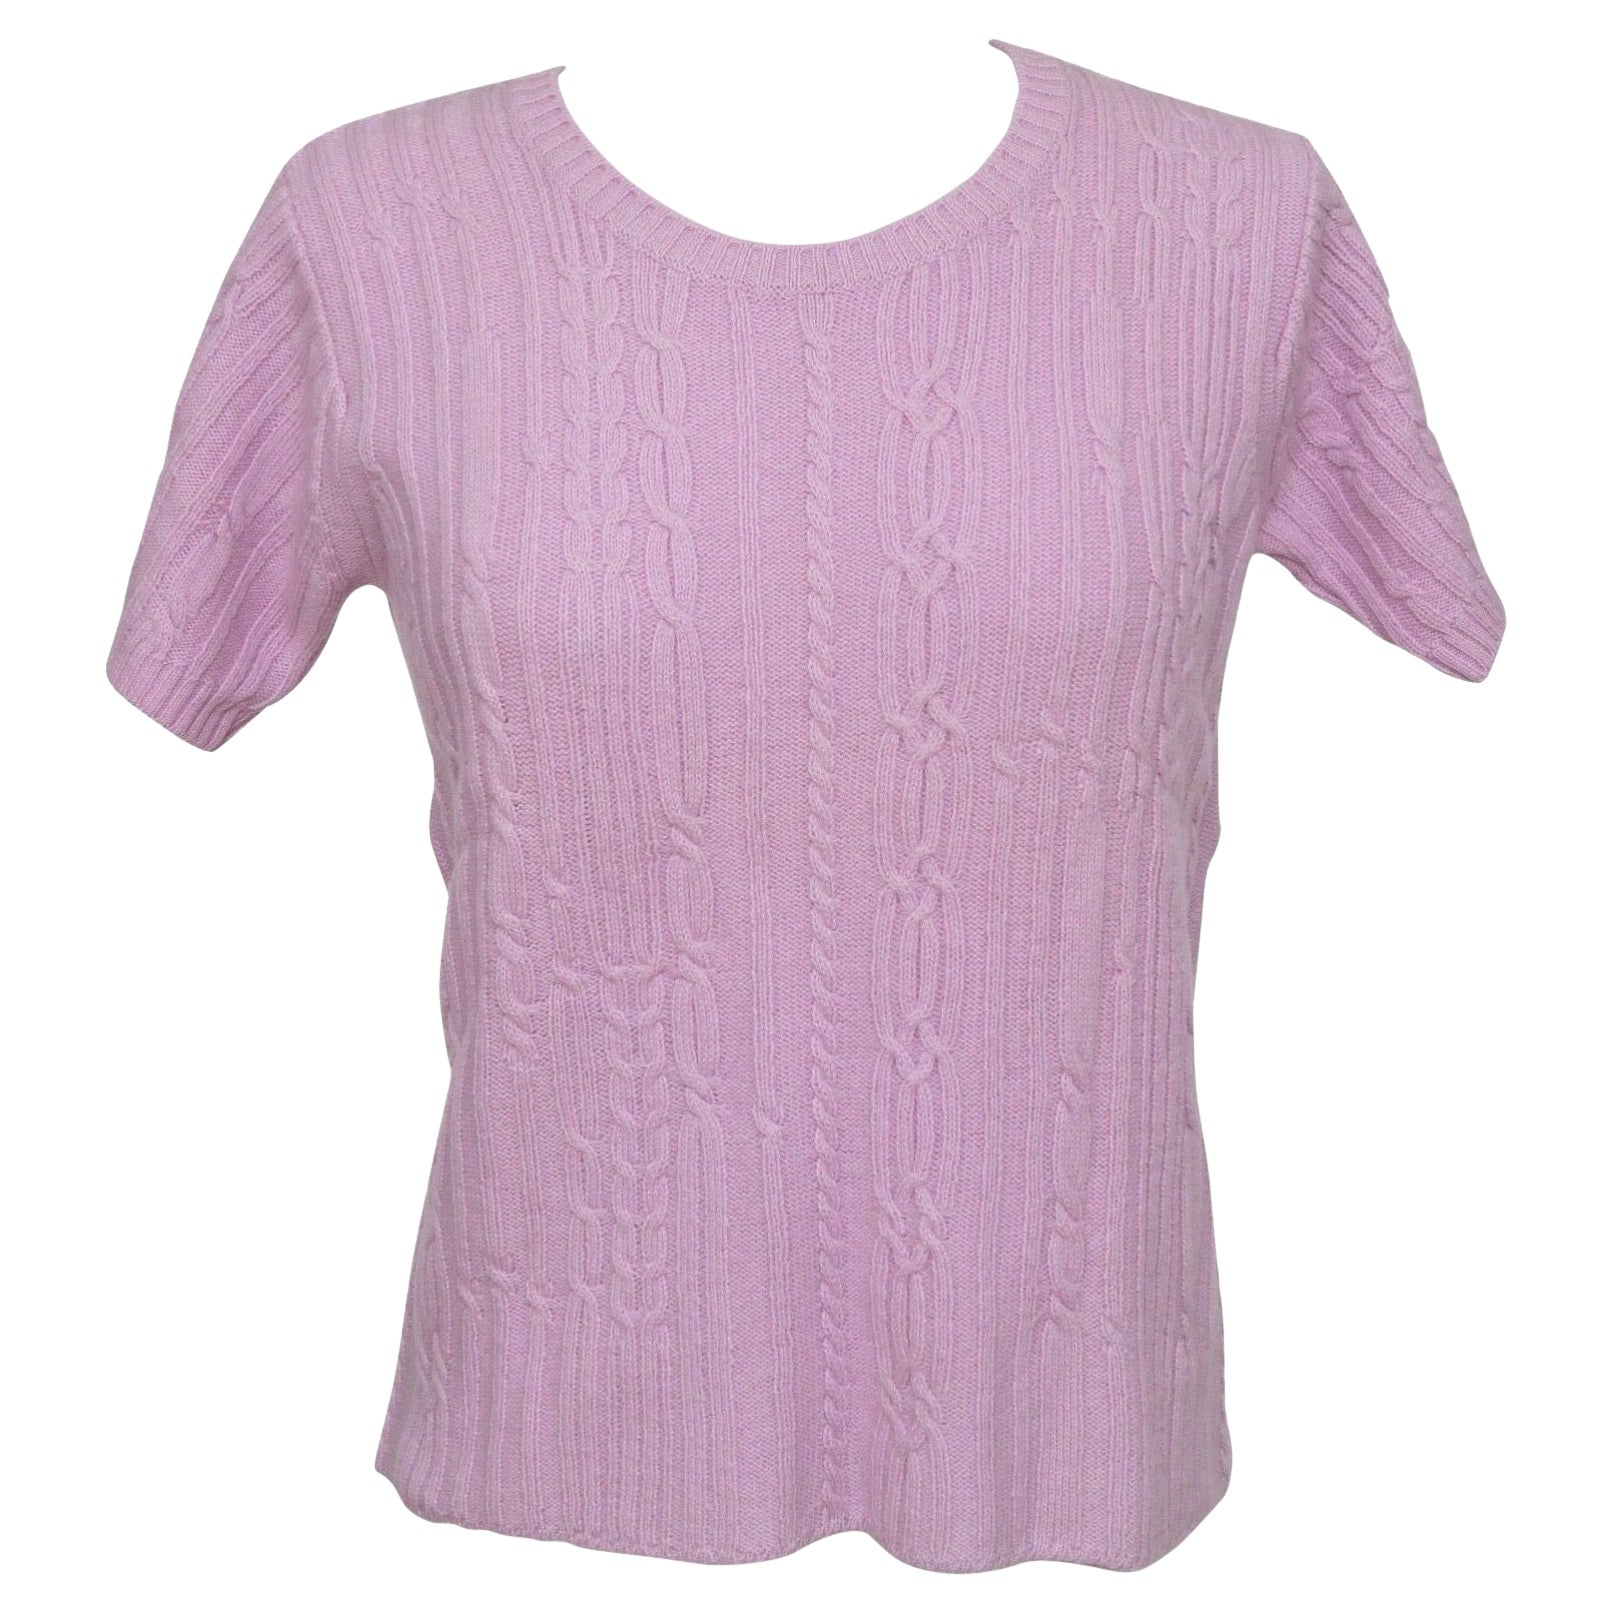 CHLOE Kurzarm-Strickpullover Top aus rosa Wolle Gr. S